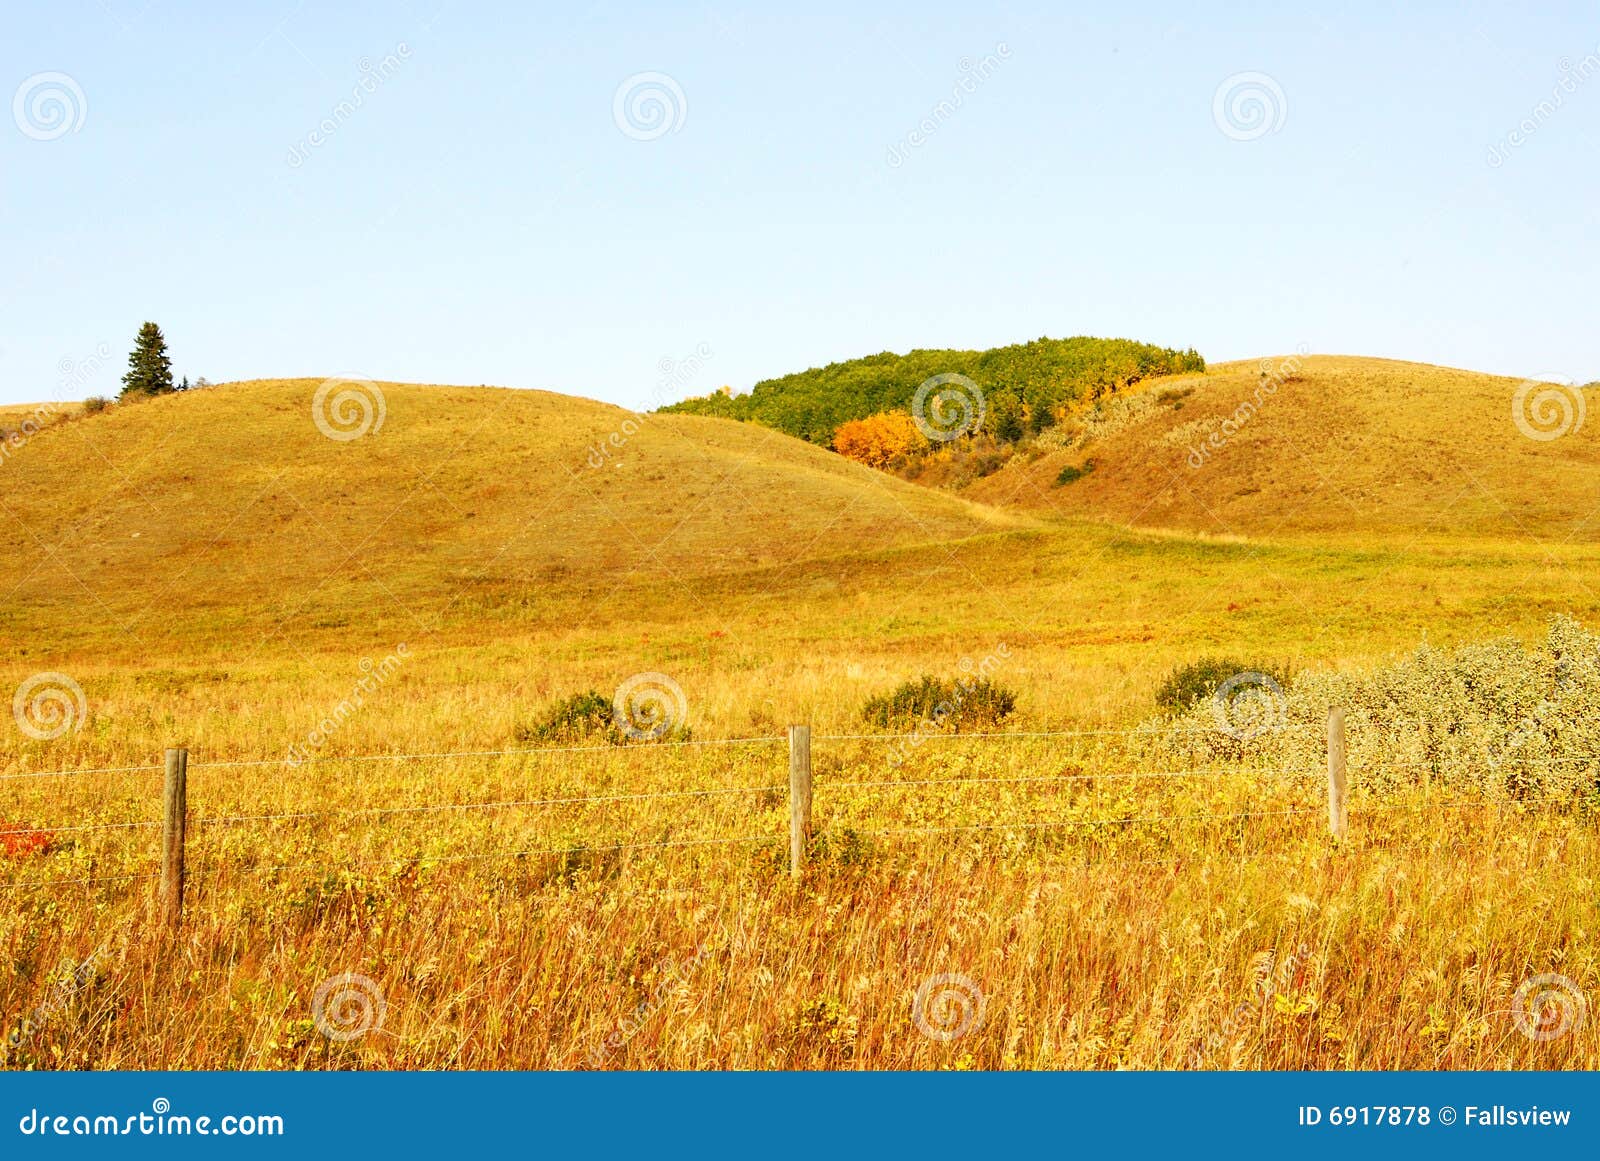 rolling grassland